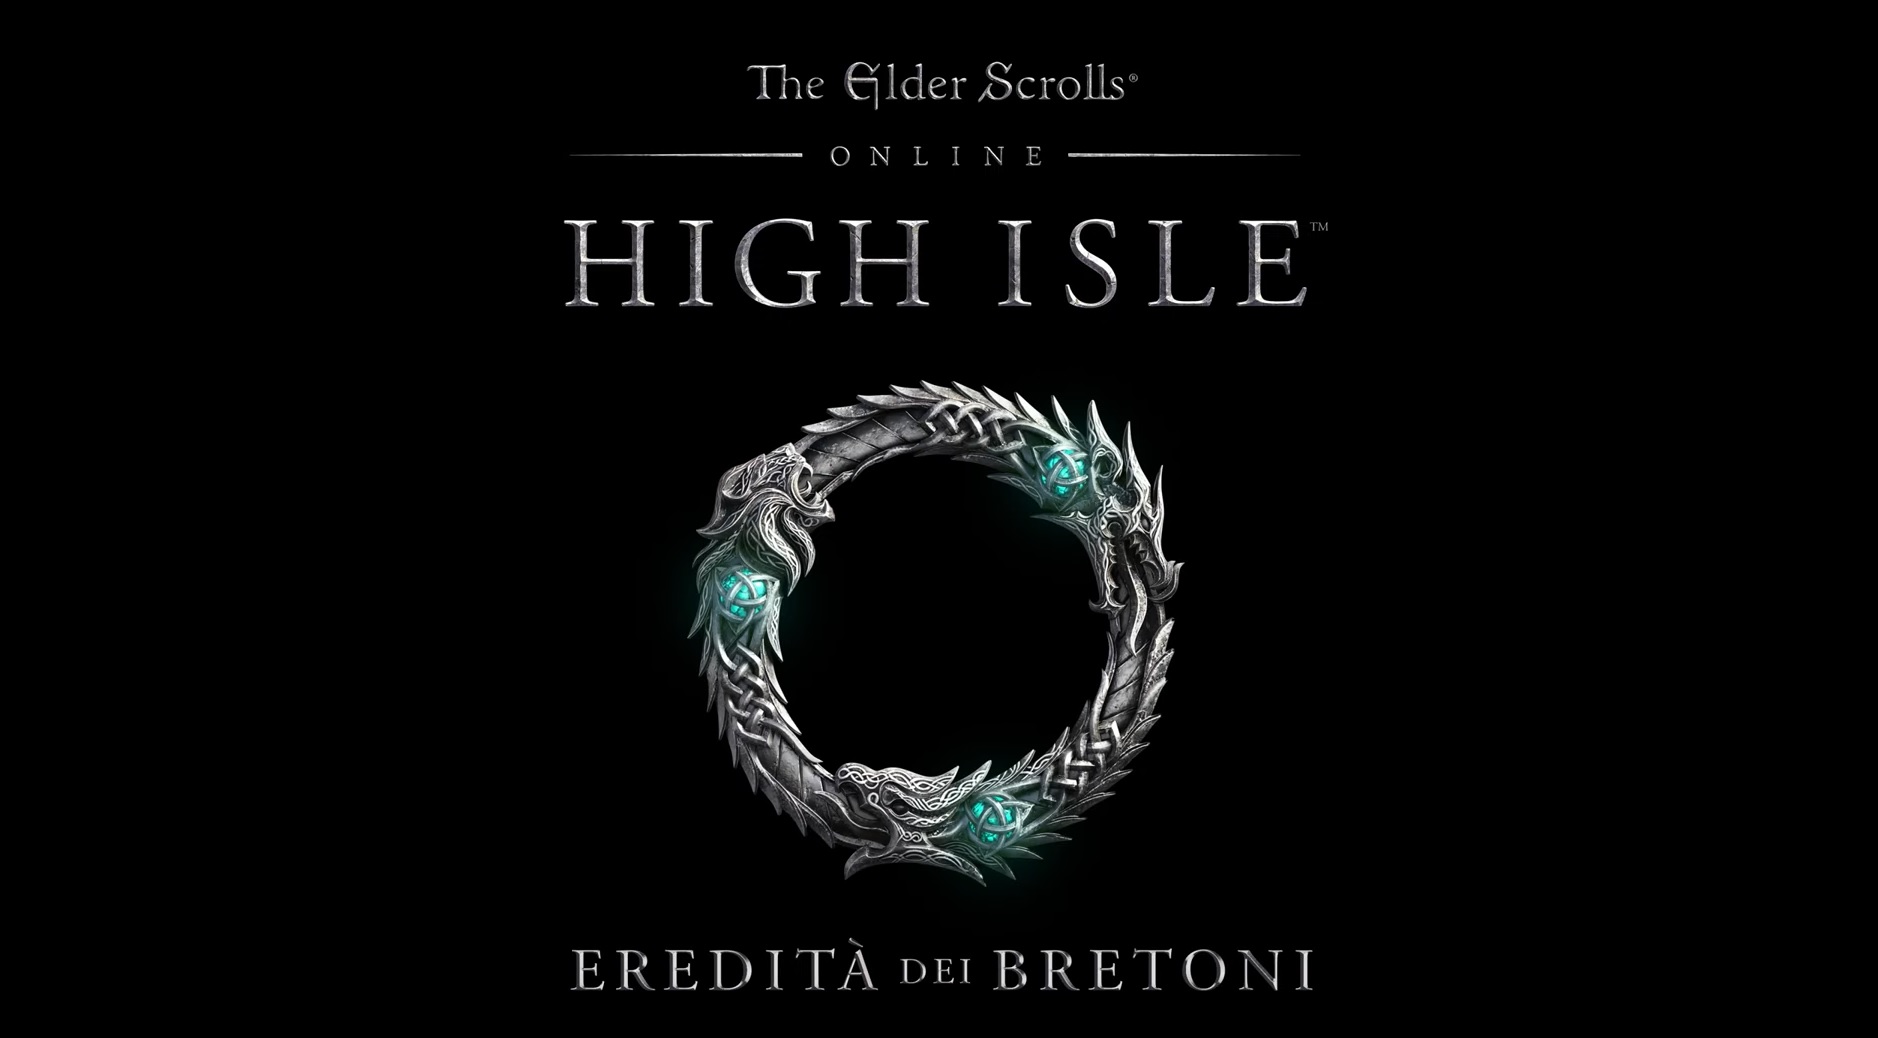 THE ELDER SCROLLS ONLINE: HIGH ISLE